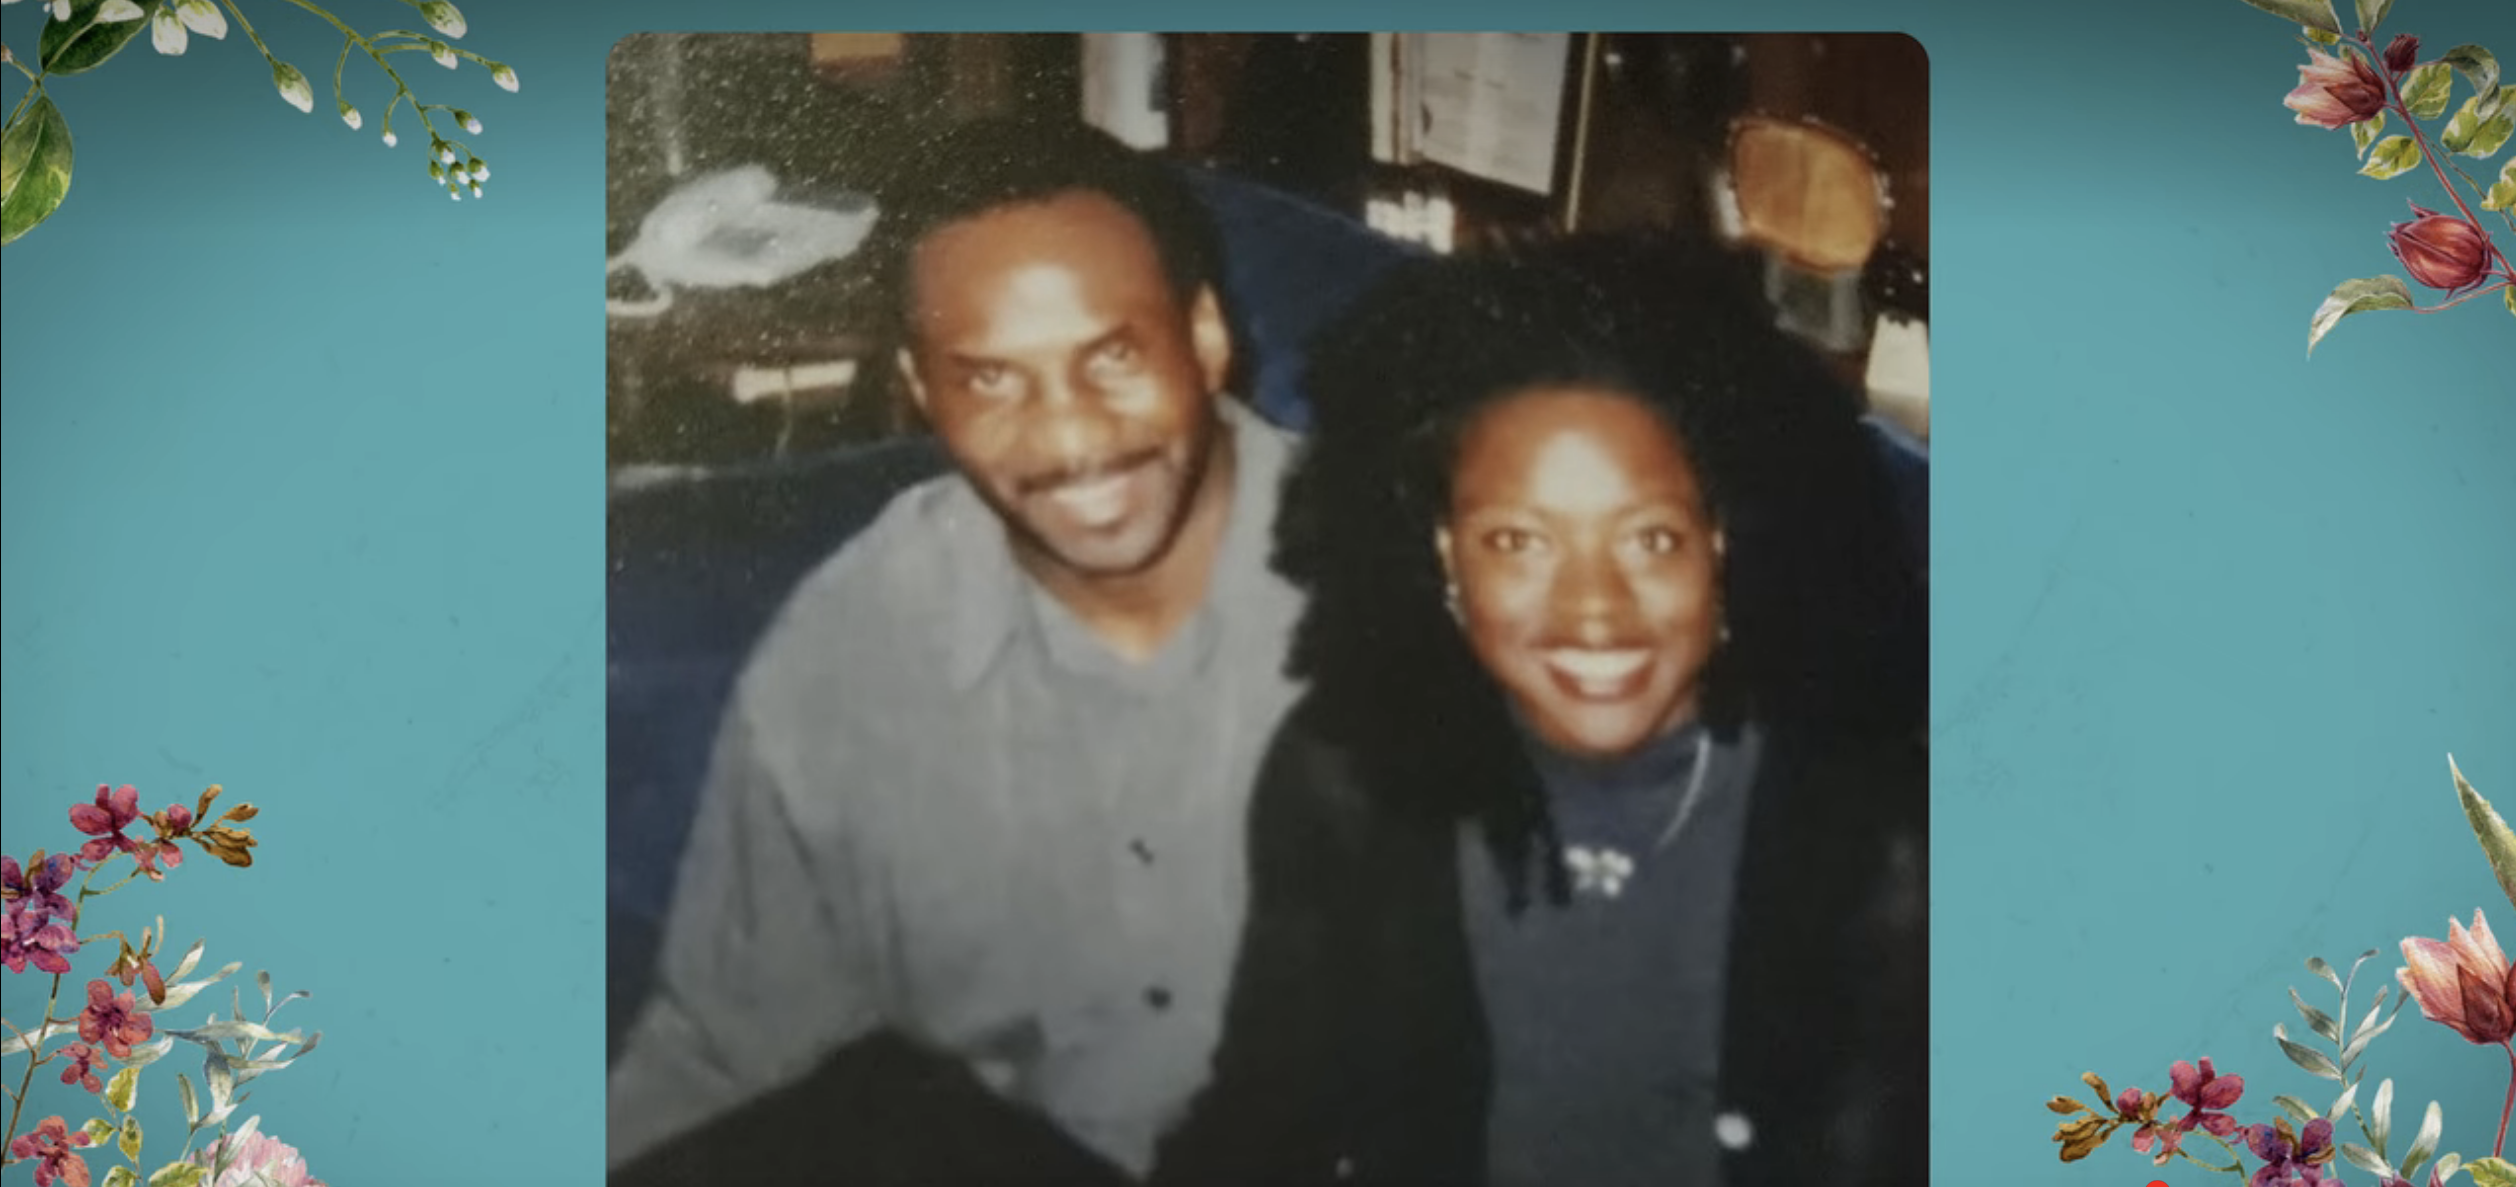 Viola Davis and her husband, Julius Tennon, are pictured